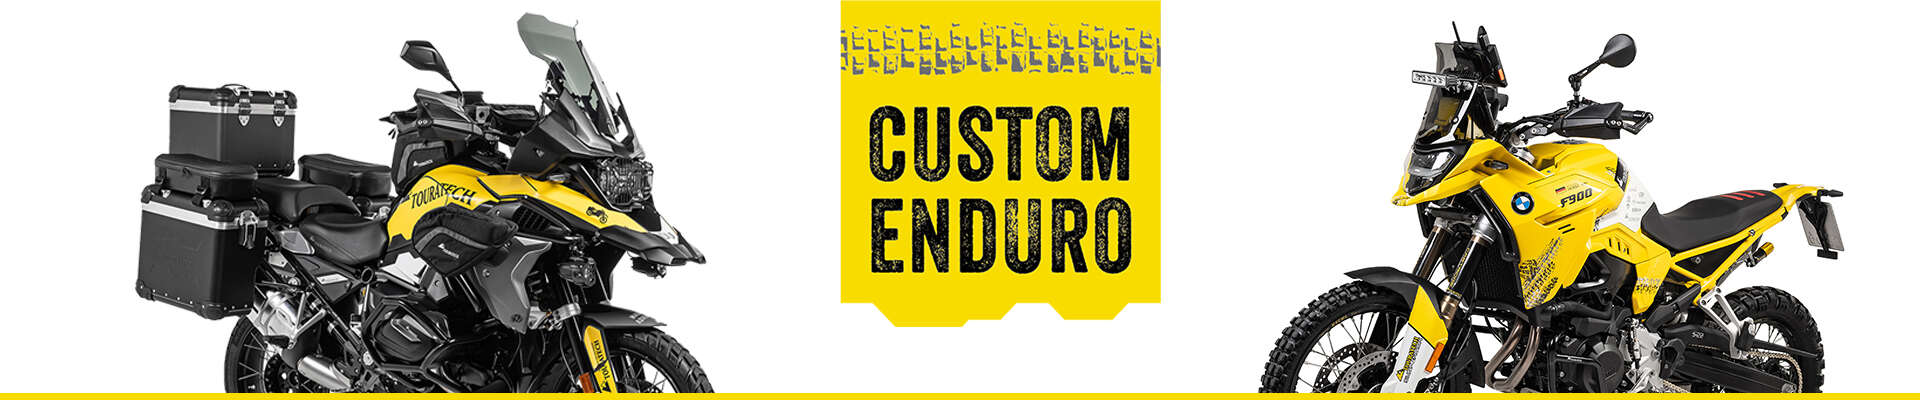 Custom-Enduro_Kopie-new